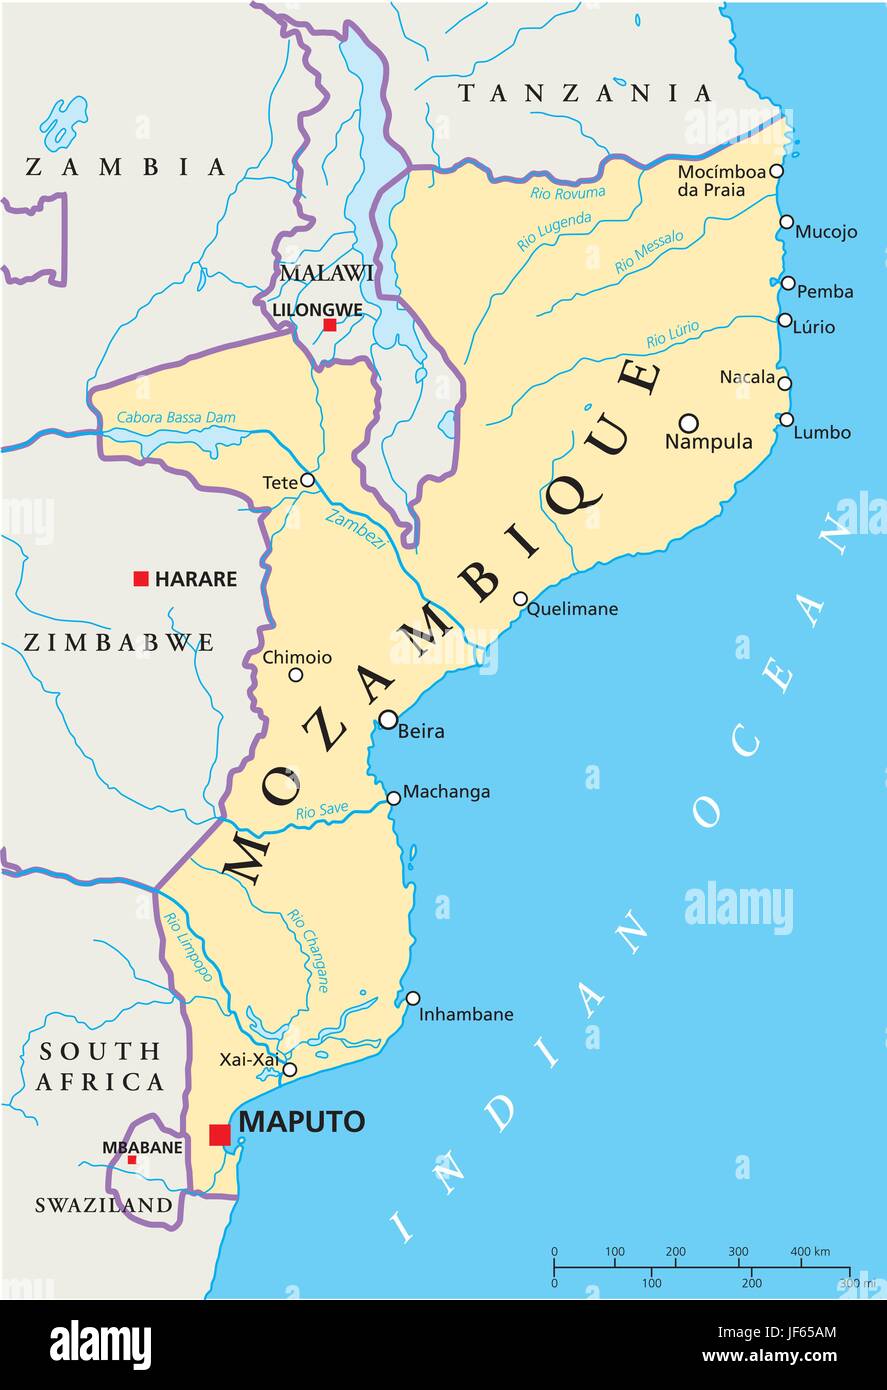 mozambique carte du monde